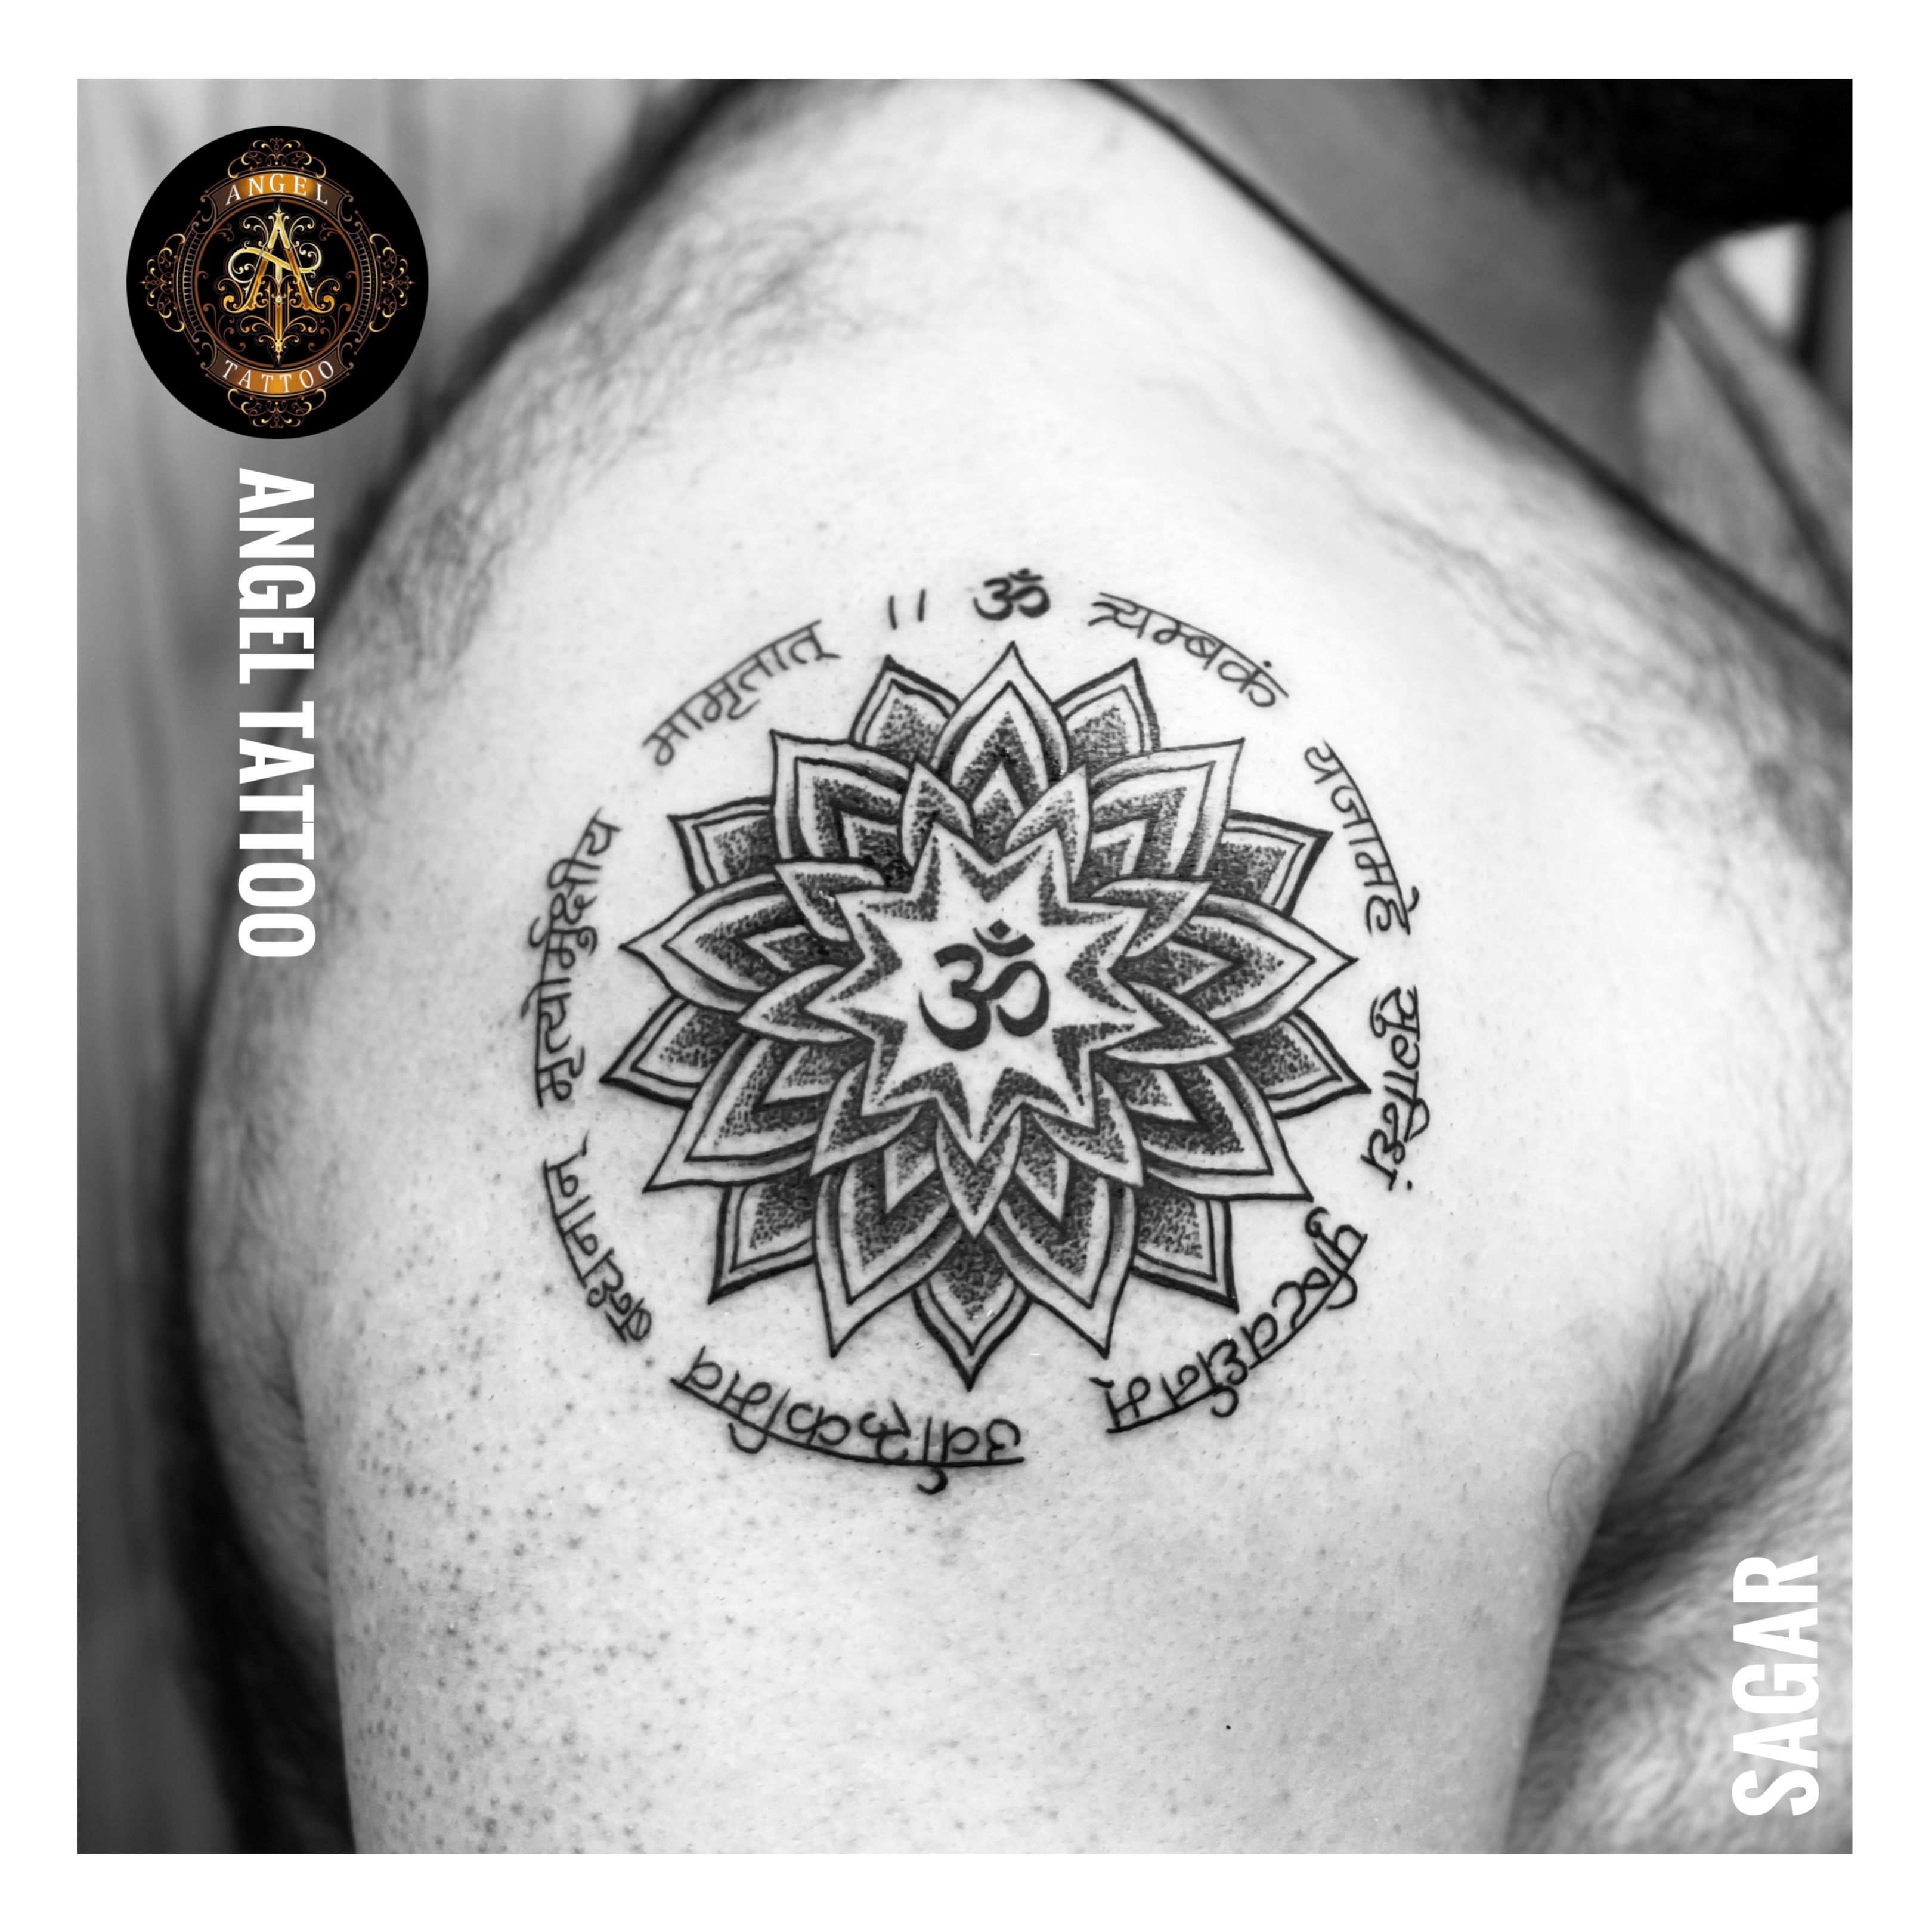 Mantra tattoo, Tattoos, Hand tattoos for guys